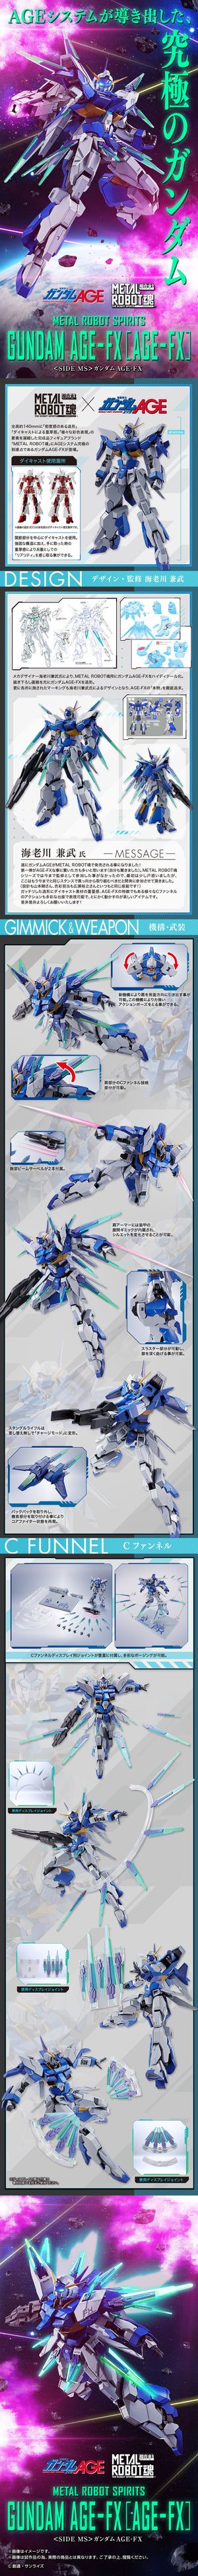 Metal Robot Spirits (SIDE MS) Gundam AGE-FX (May & June Ship Date)